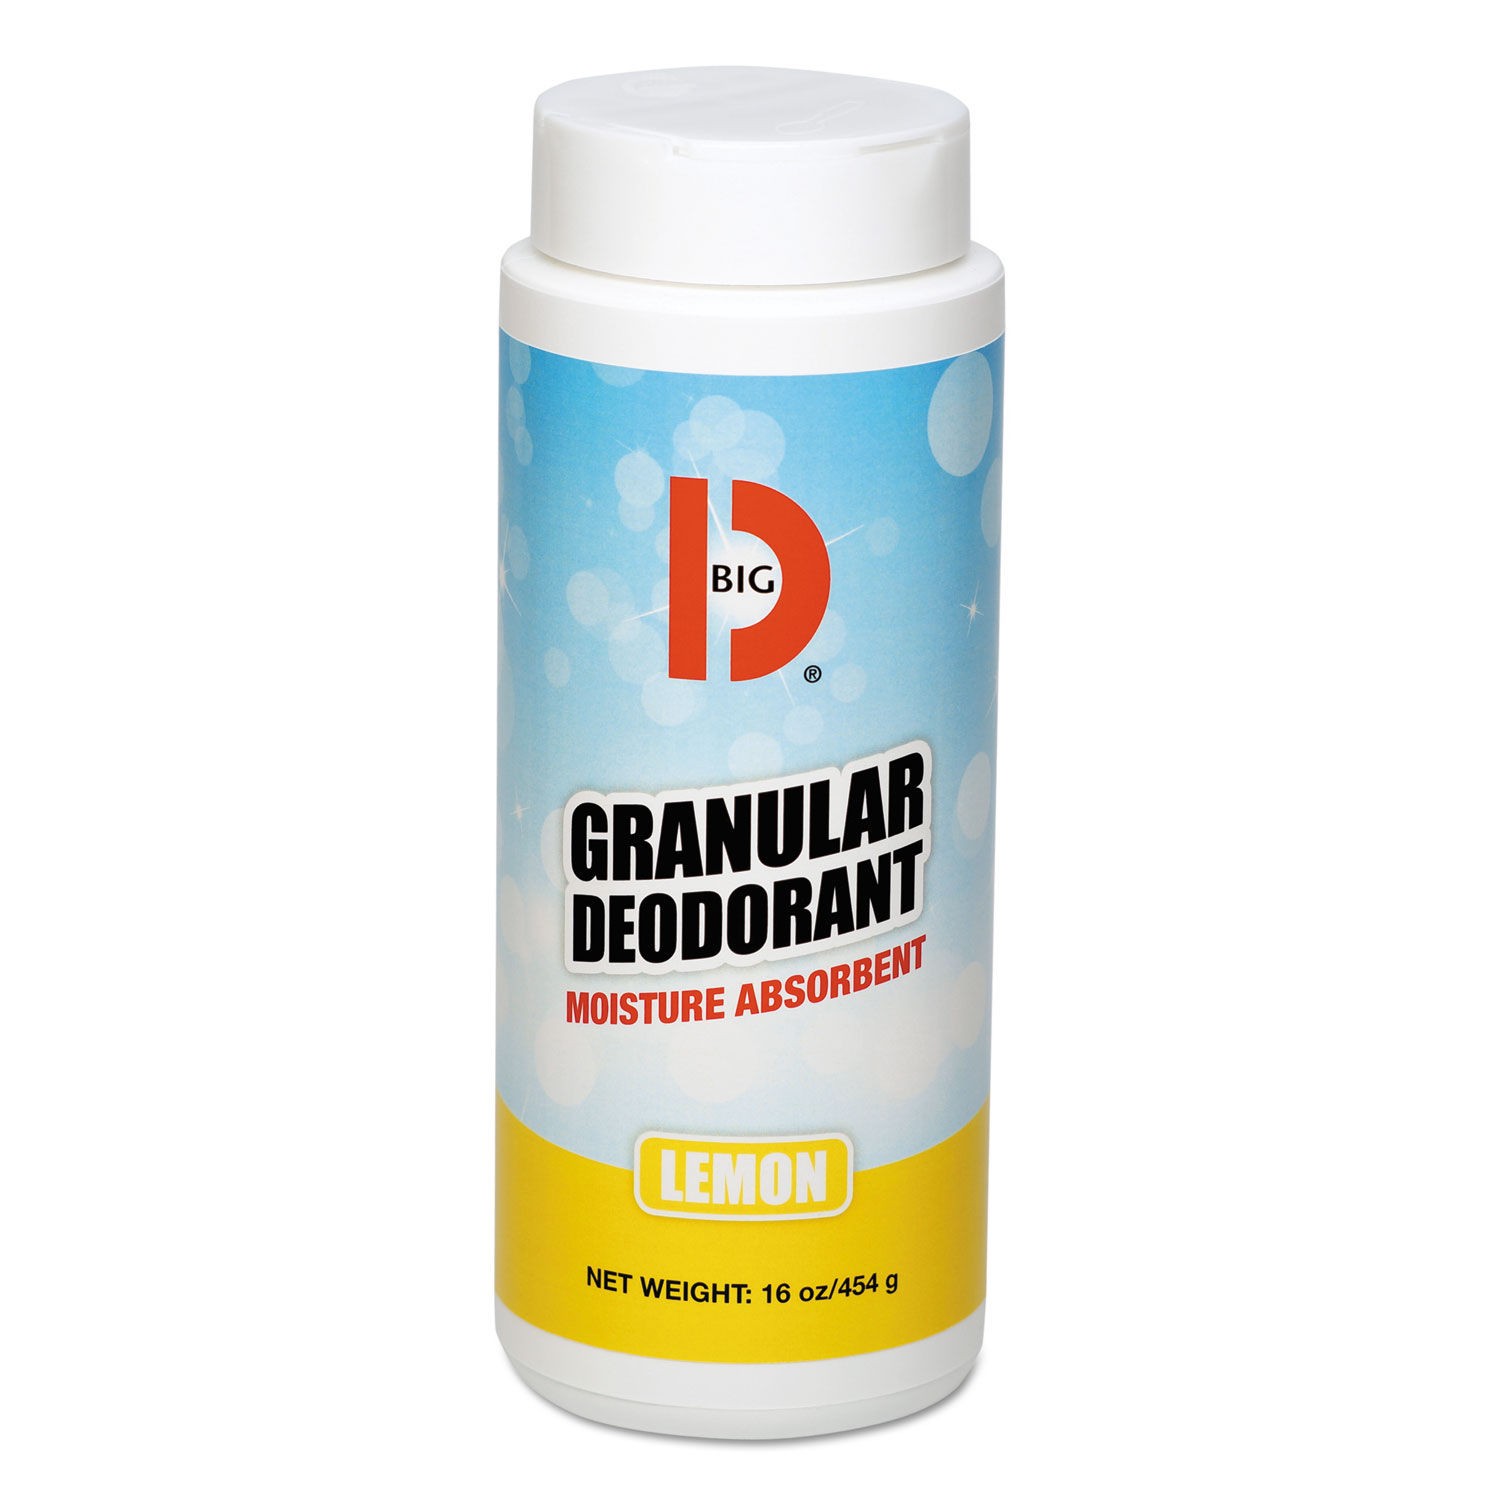 Granular Deodorant Can, Lemon, 16 oz., 12/Carton